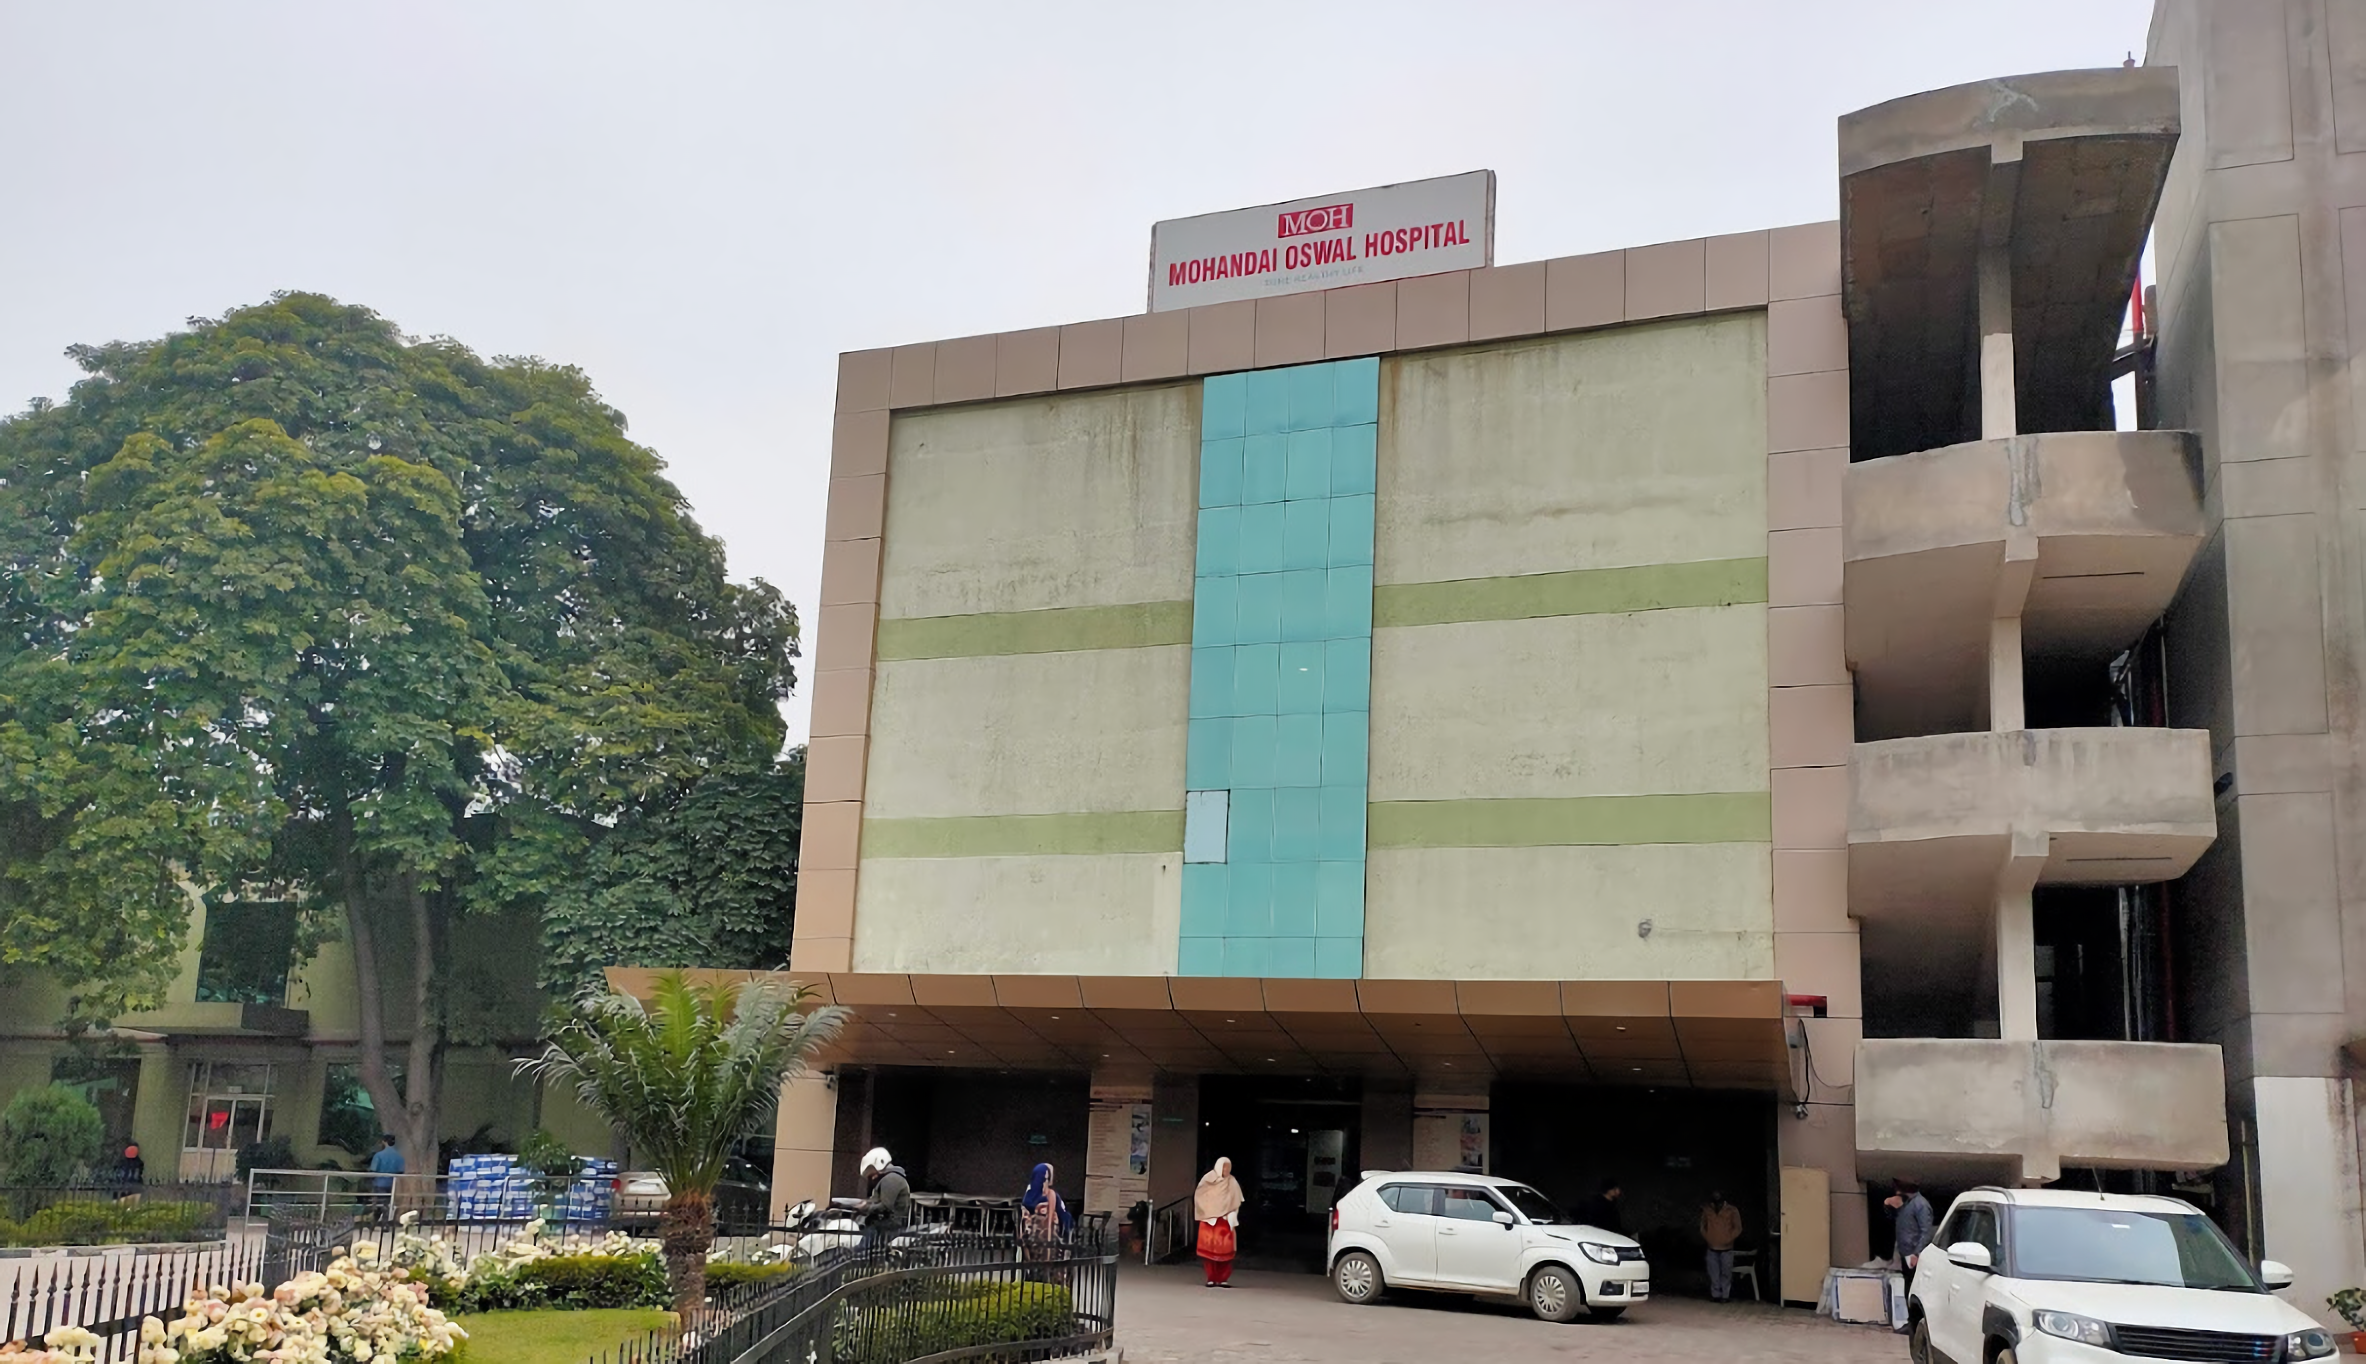 Mohandai Oswal Hospital